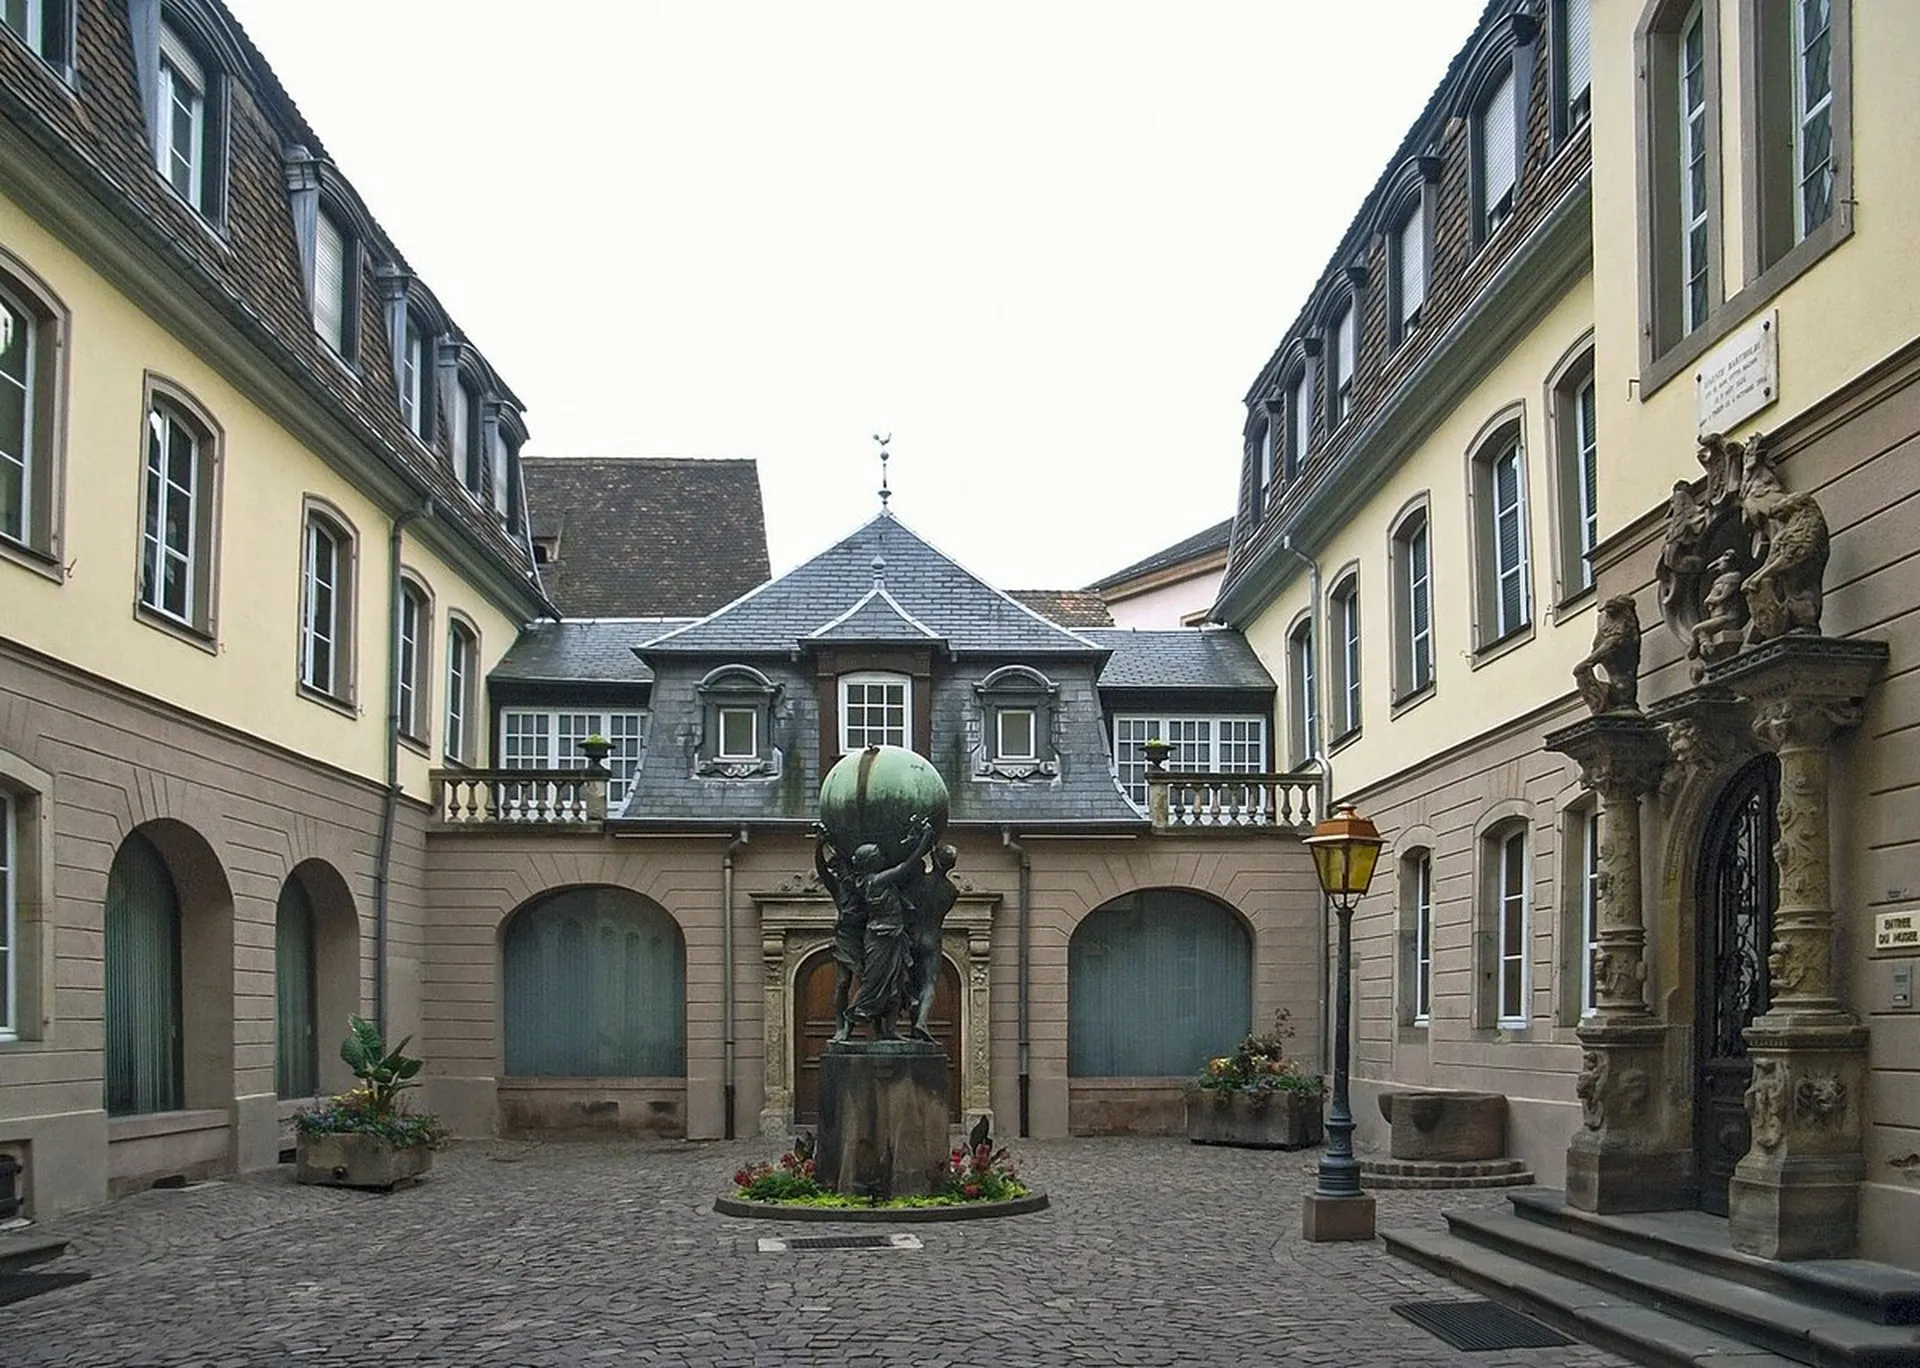 Musee Bartholdi